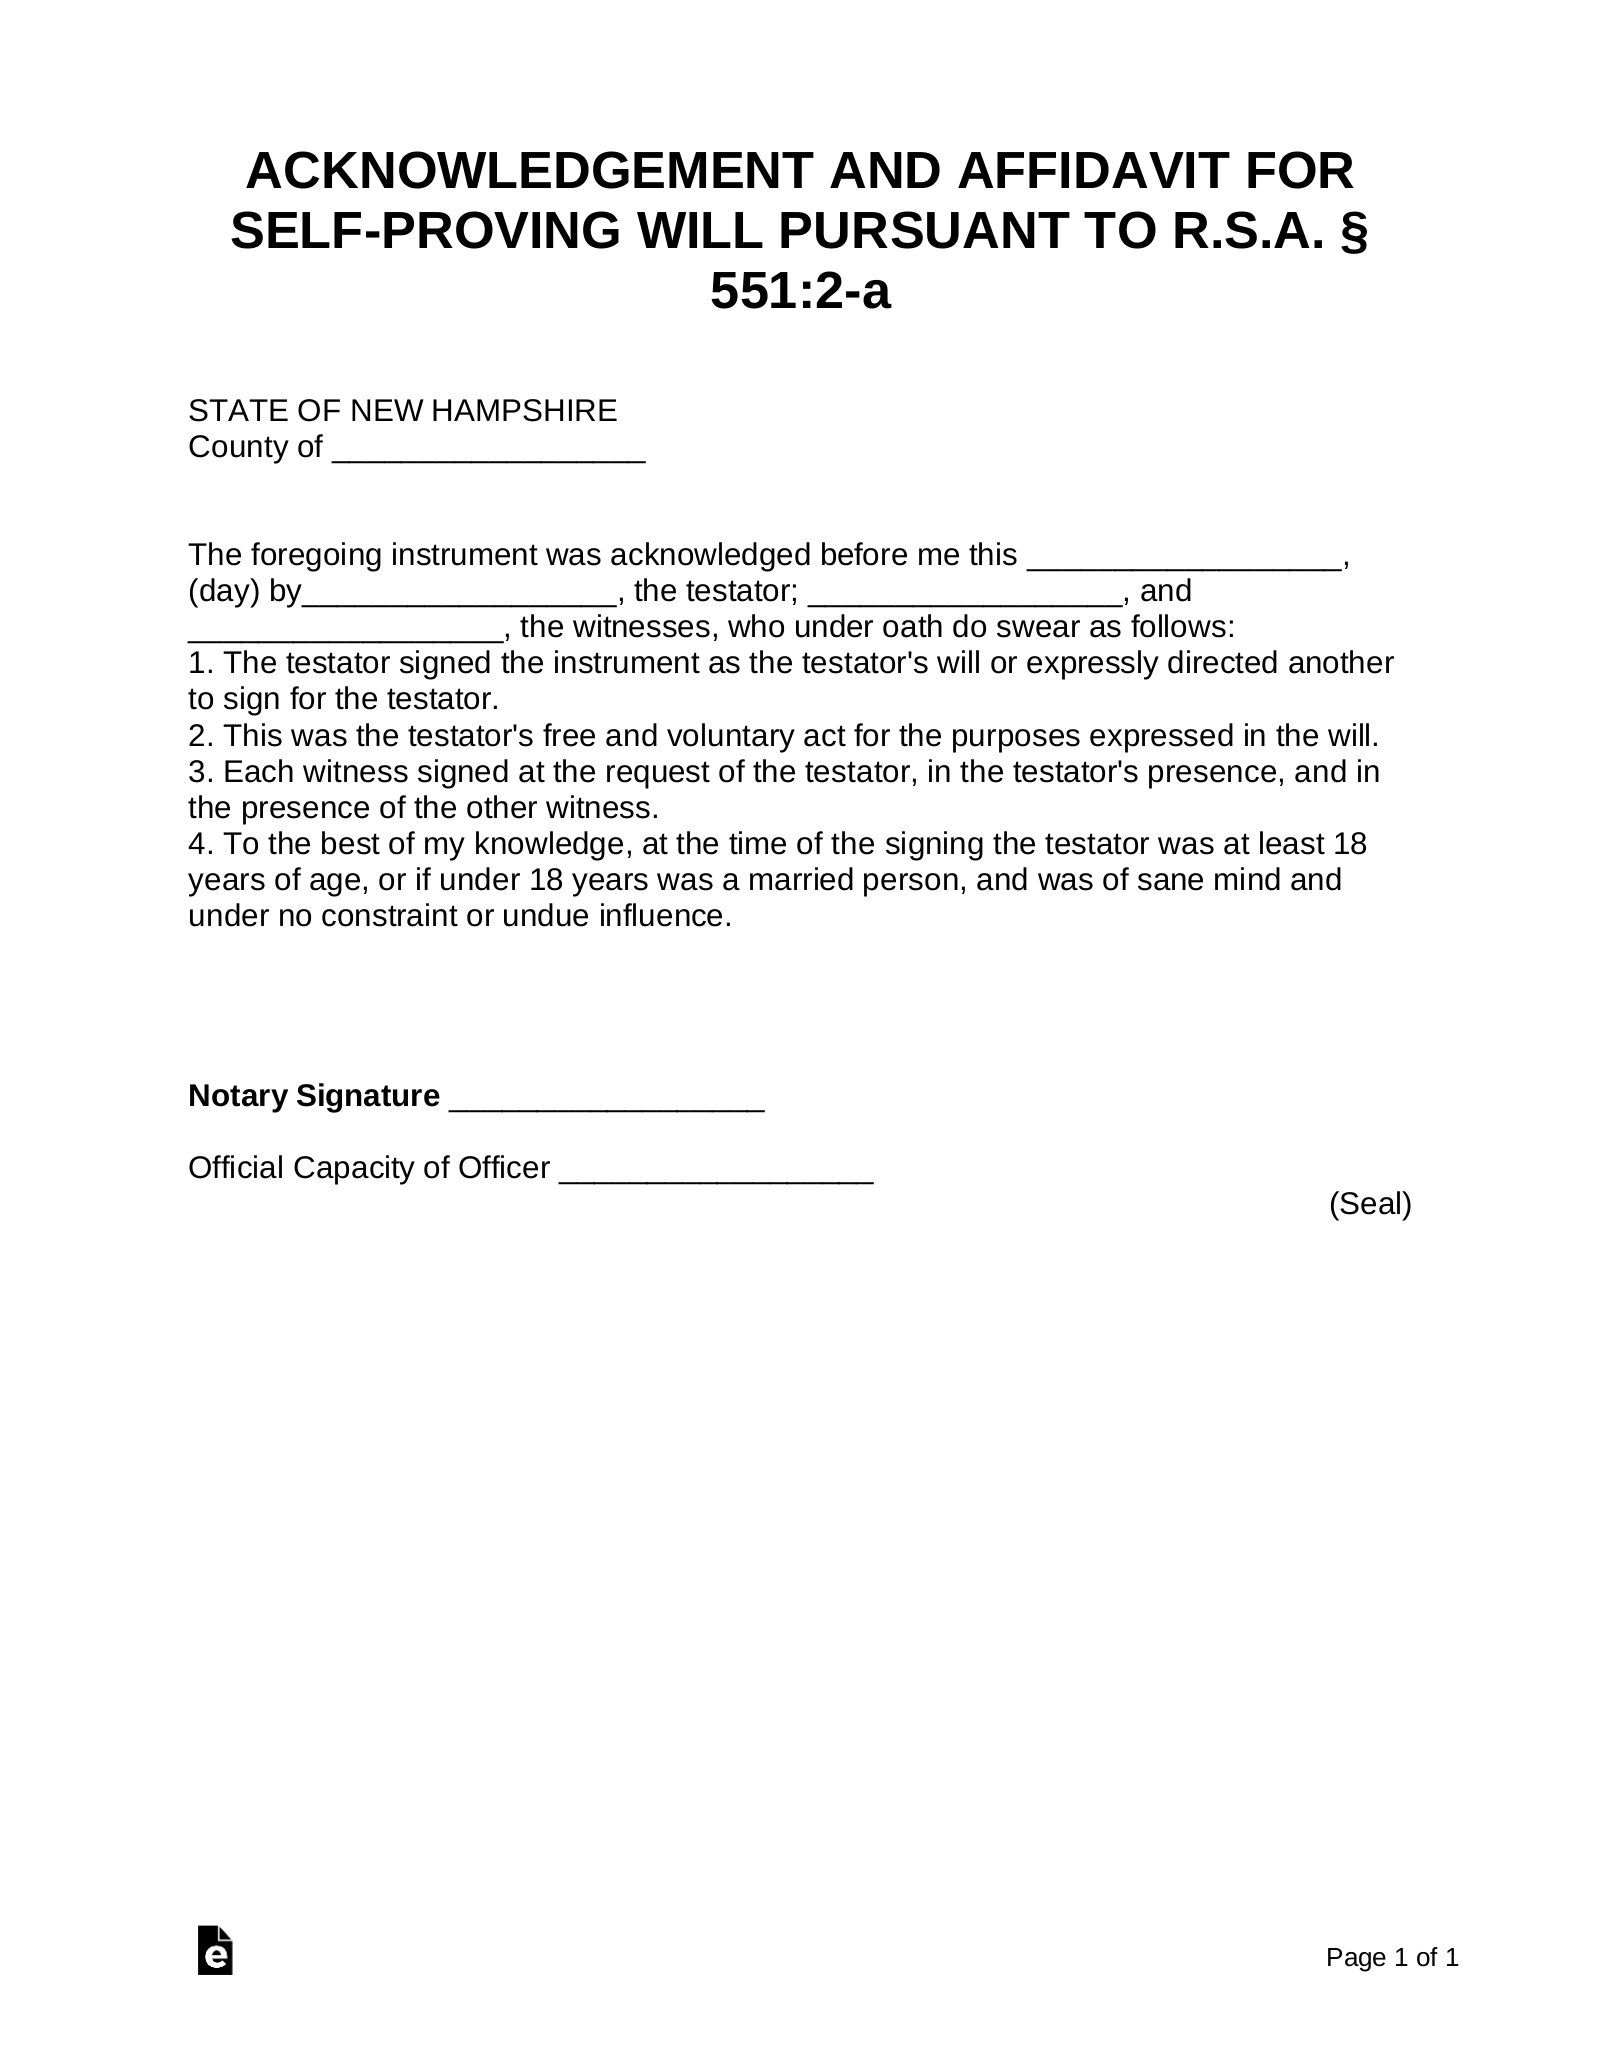 New Hampshire Self-Proving Affidavit Form